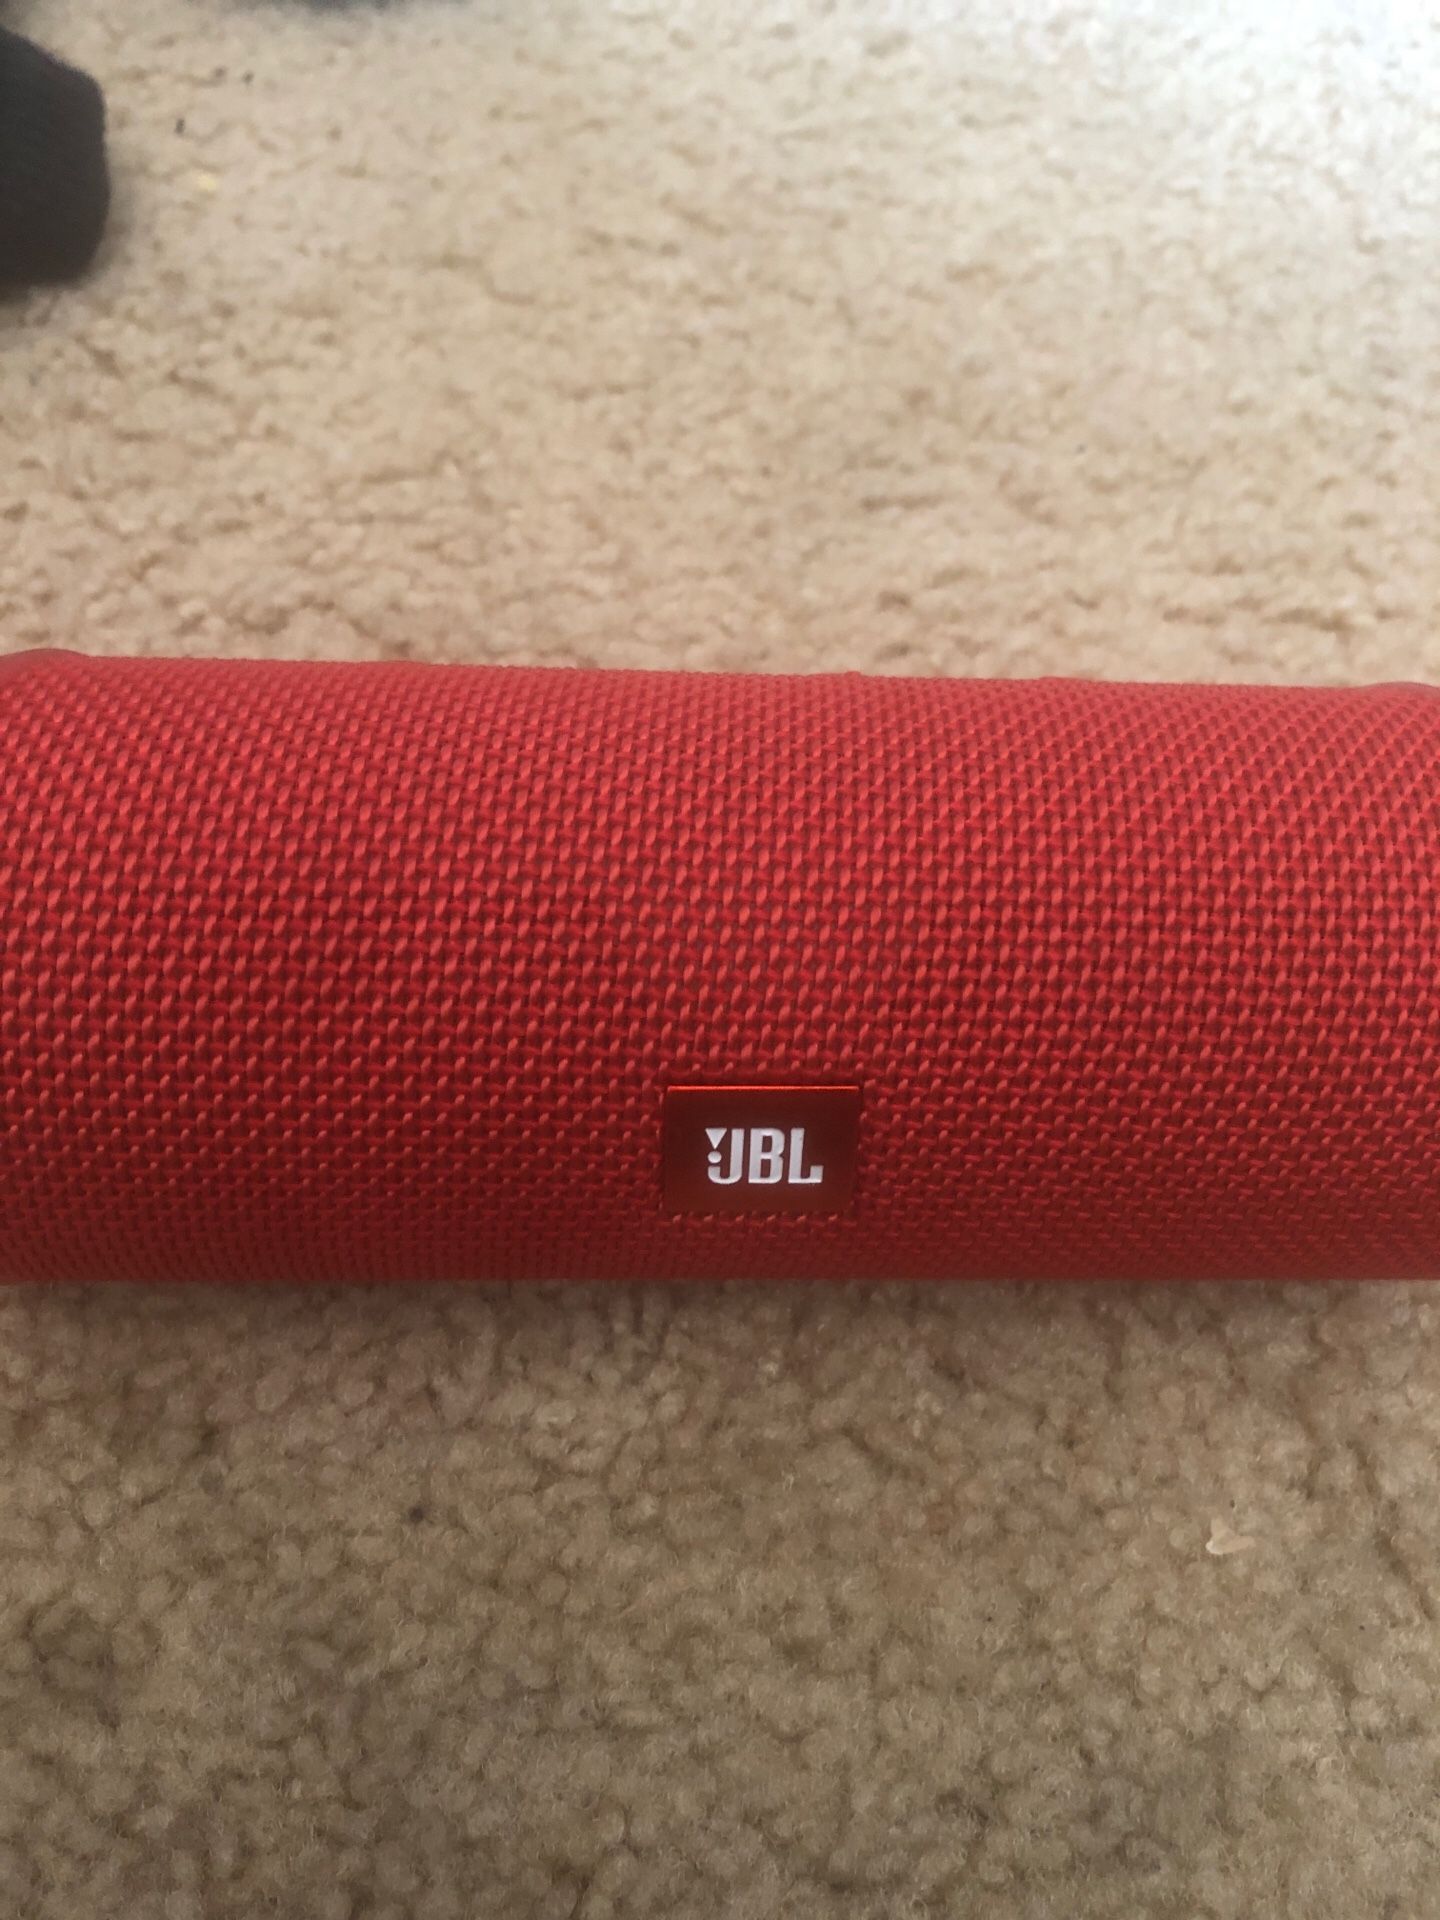 Jbl flip 4 waterproof Bluetooth speaker